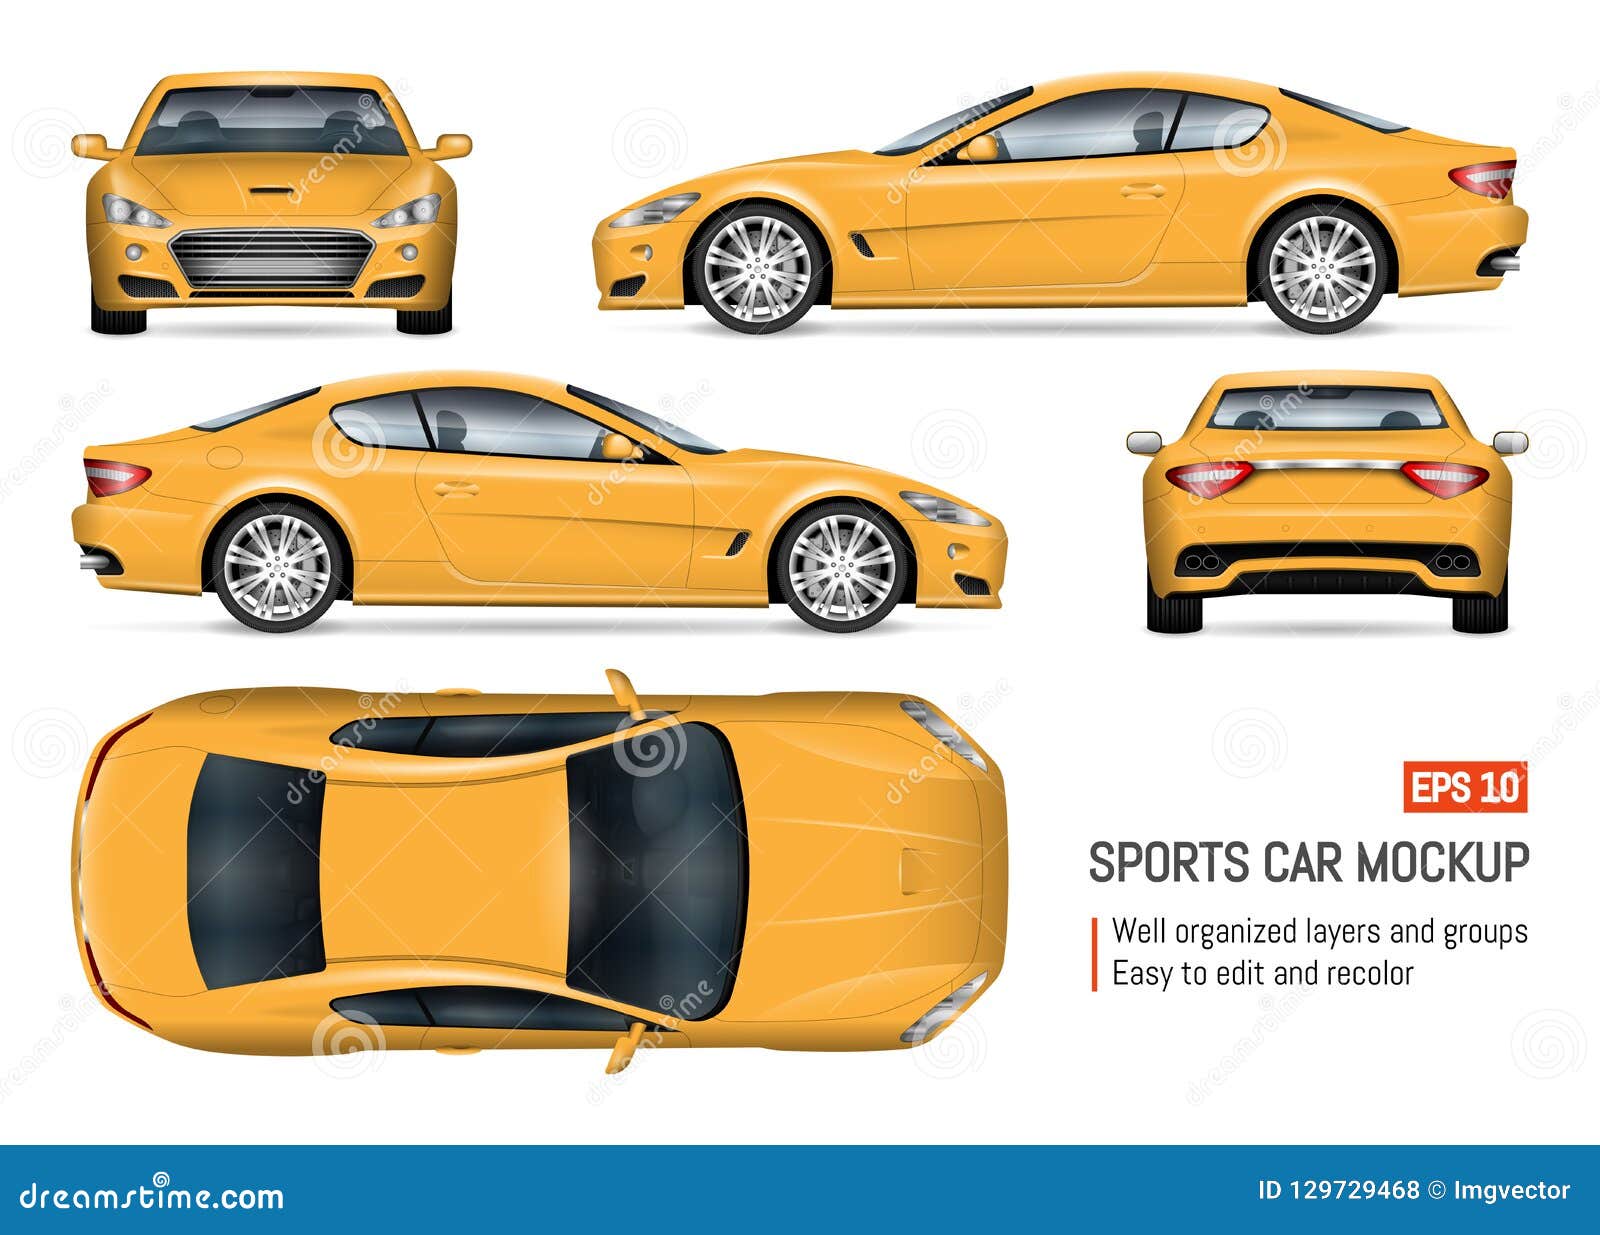 Realistic Yellow Car Vector Illustration Stock Vector Illustration Of Overhead Profile 129729468